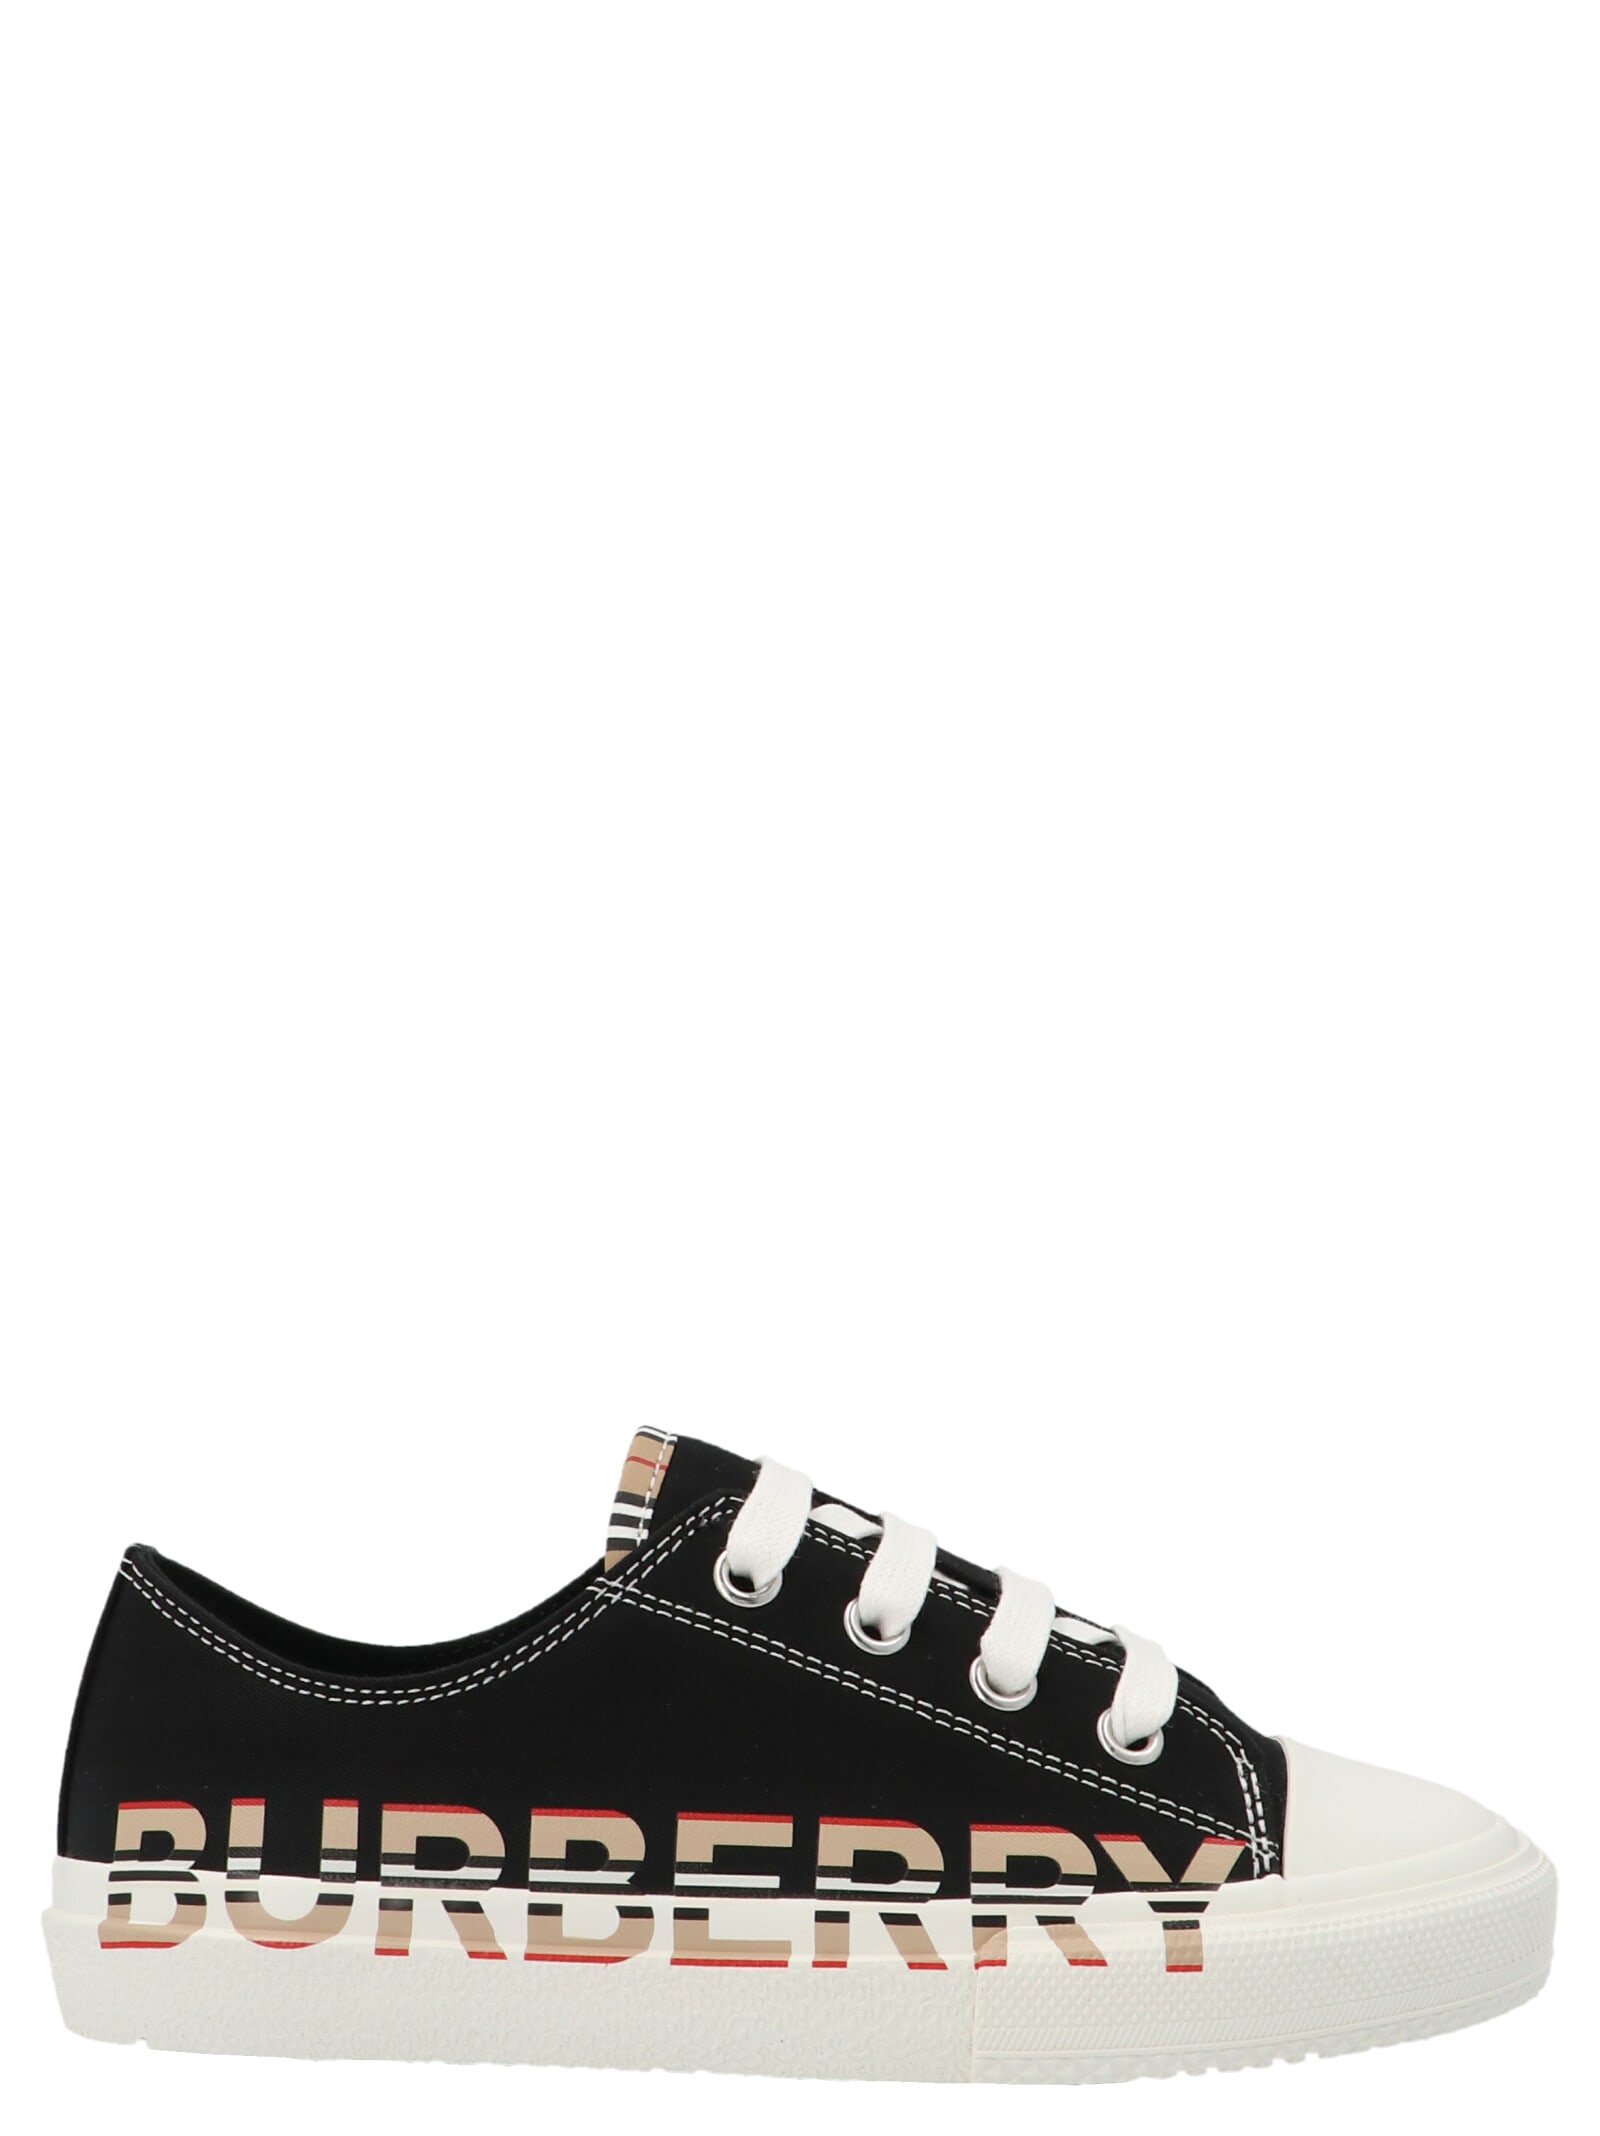 Burberry Logo Sneakers